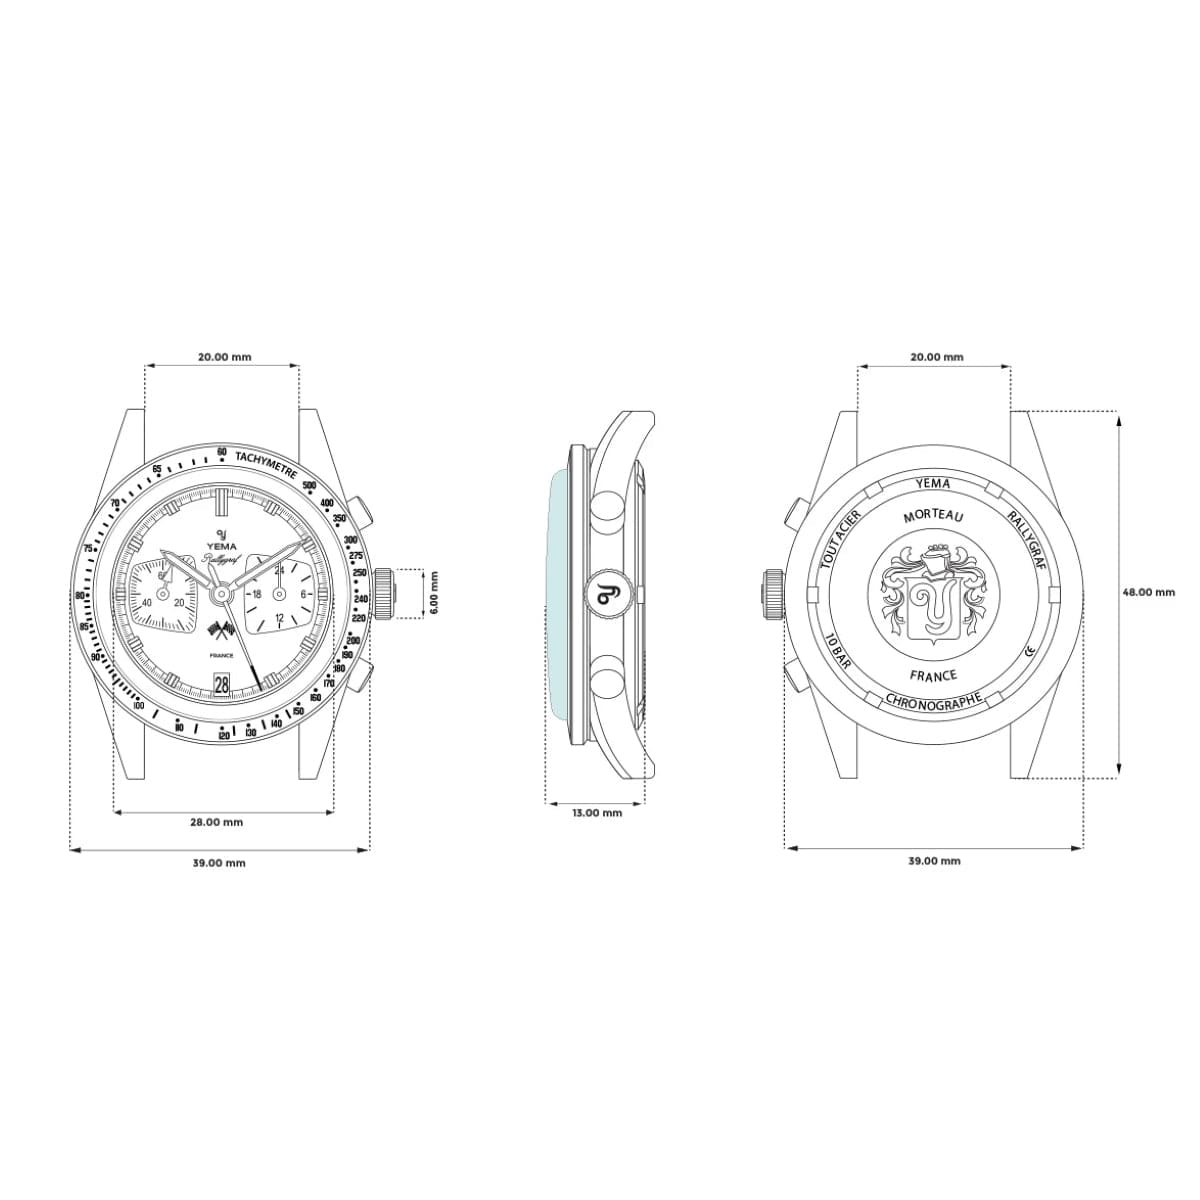 Yema Rallygraf Blue Tarmac Chronograph Watch - Blue and White Dial - 39mm YMHF1572-GM Technical Drawing